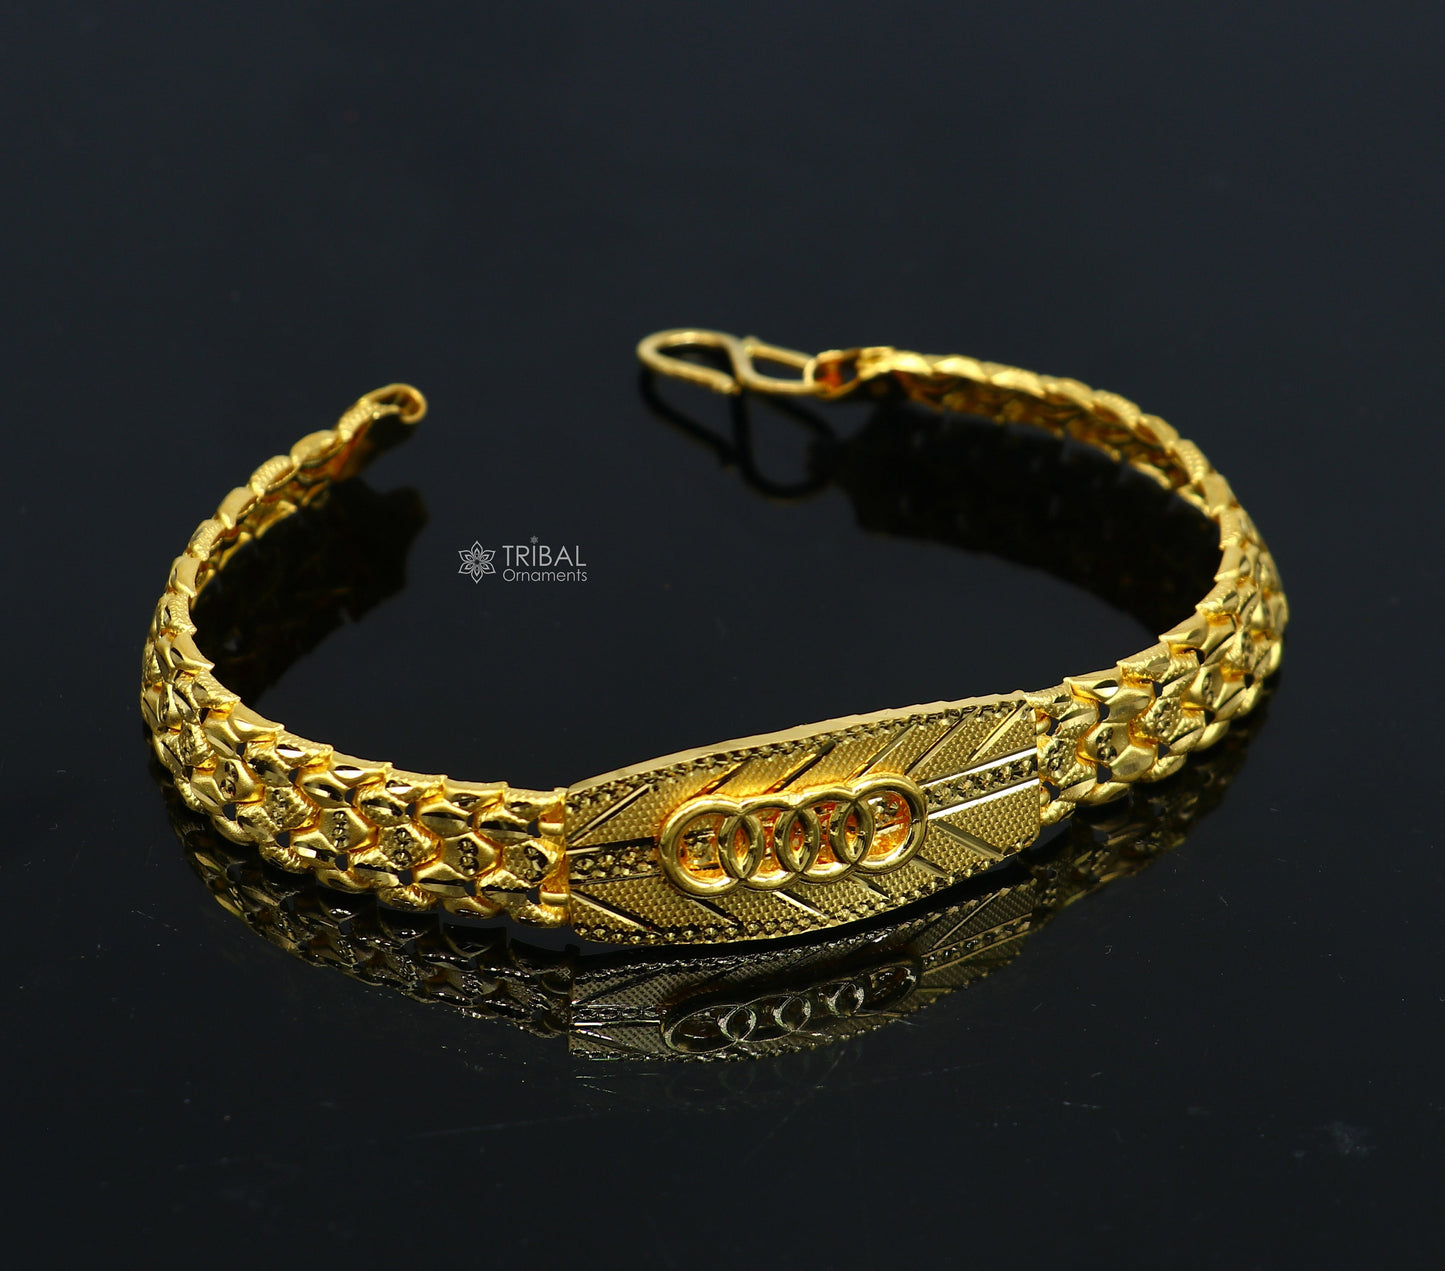 22kt yellow gold handmade unique chain AUDI bracelet unisex 91.6% gold purity stylish fancy bracelet jewelry best men's gifting gbr79 - TRIBAL ORNAMENTS